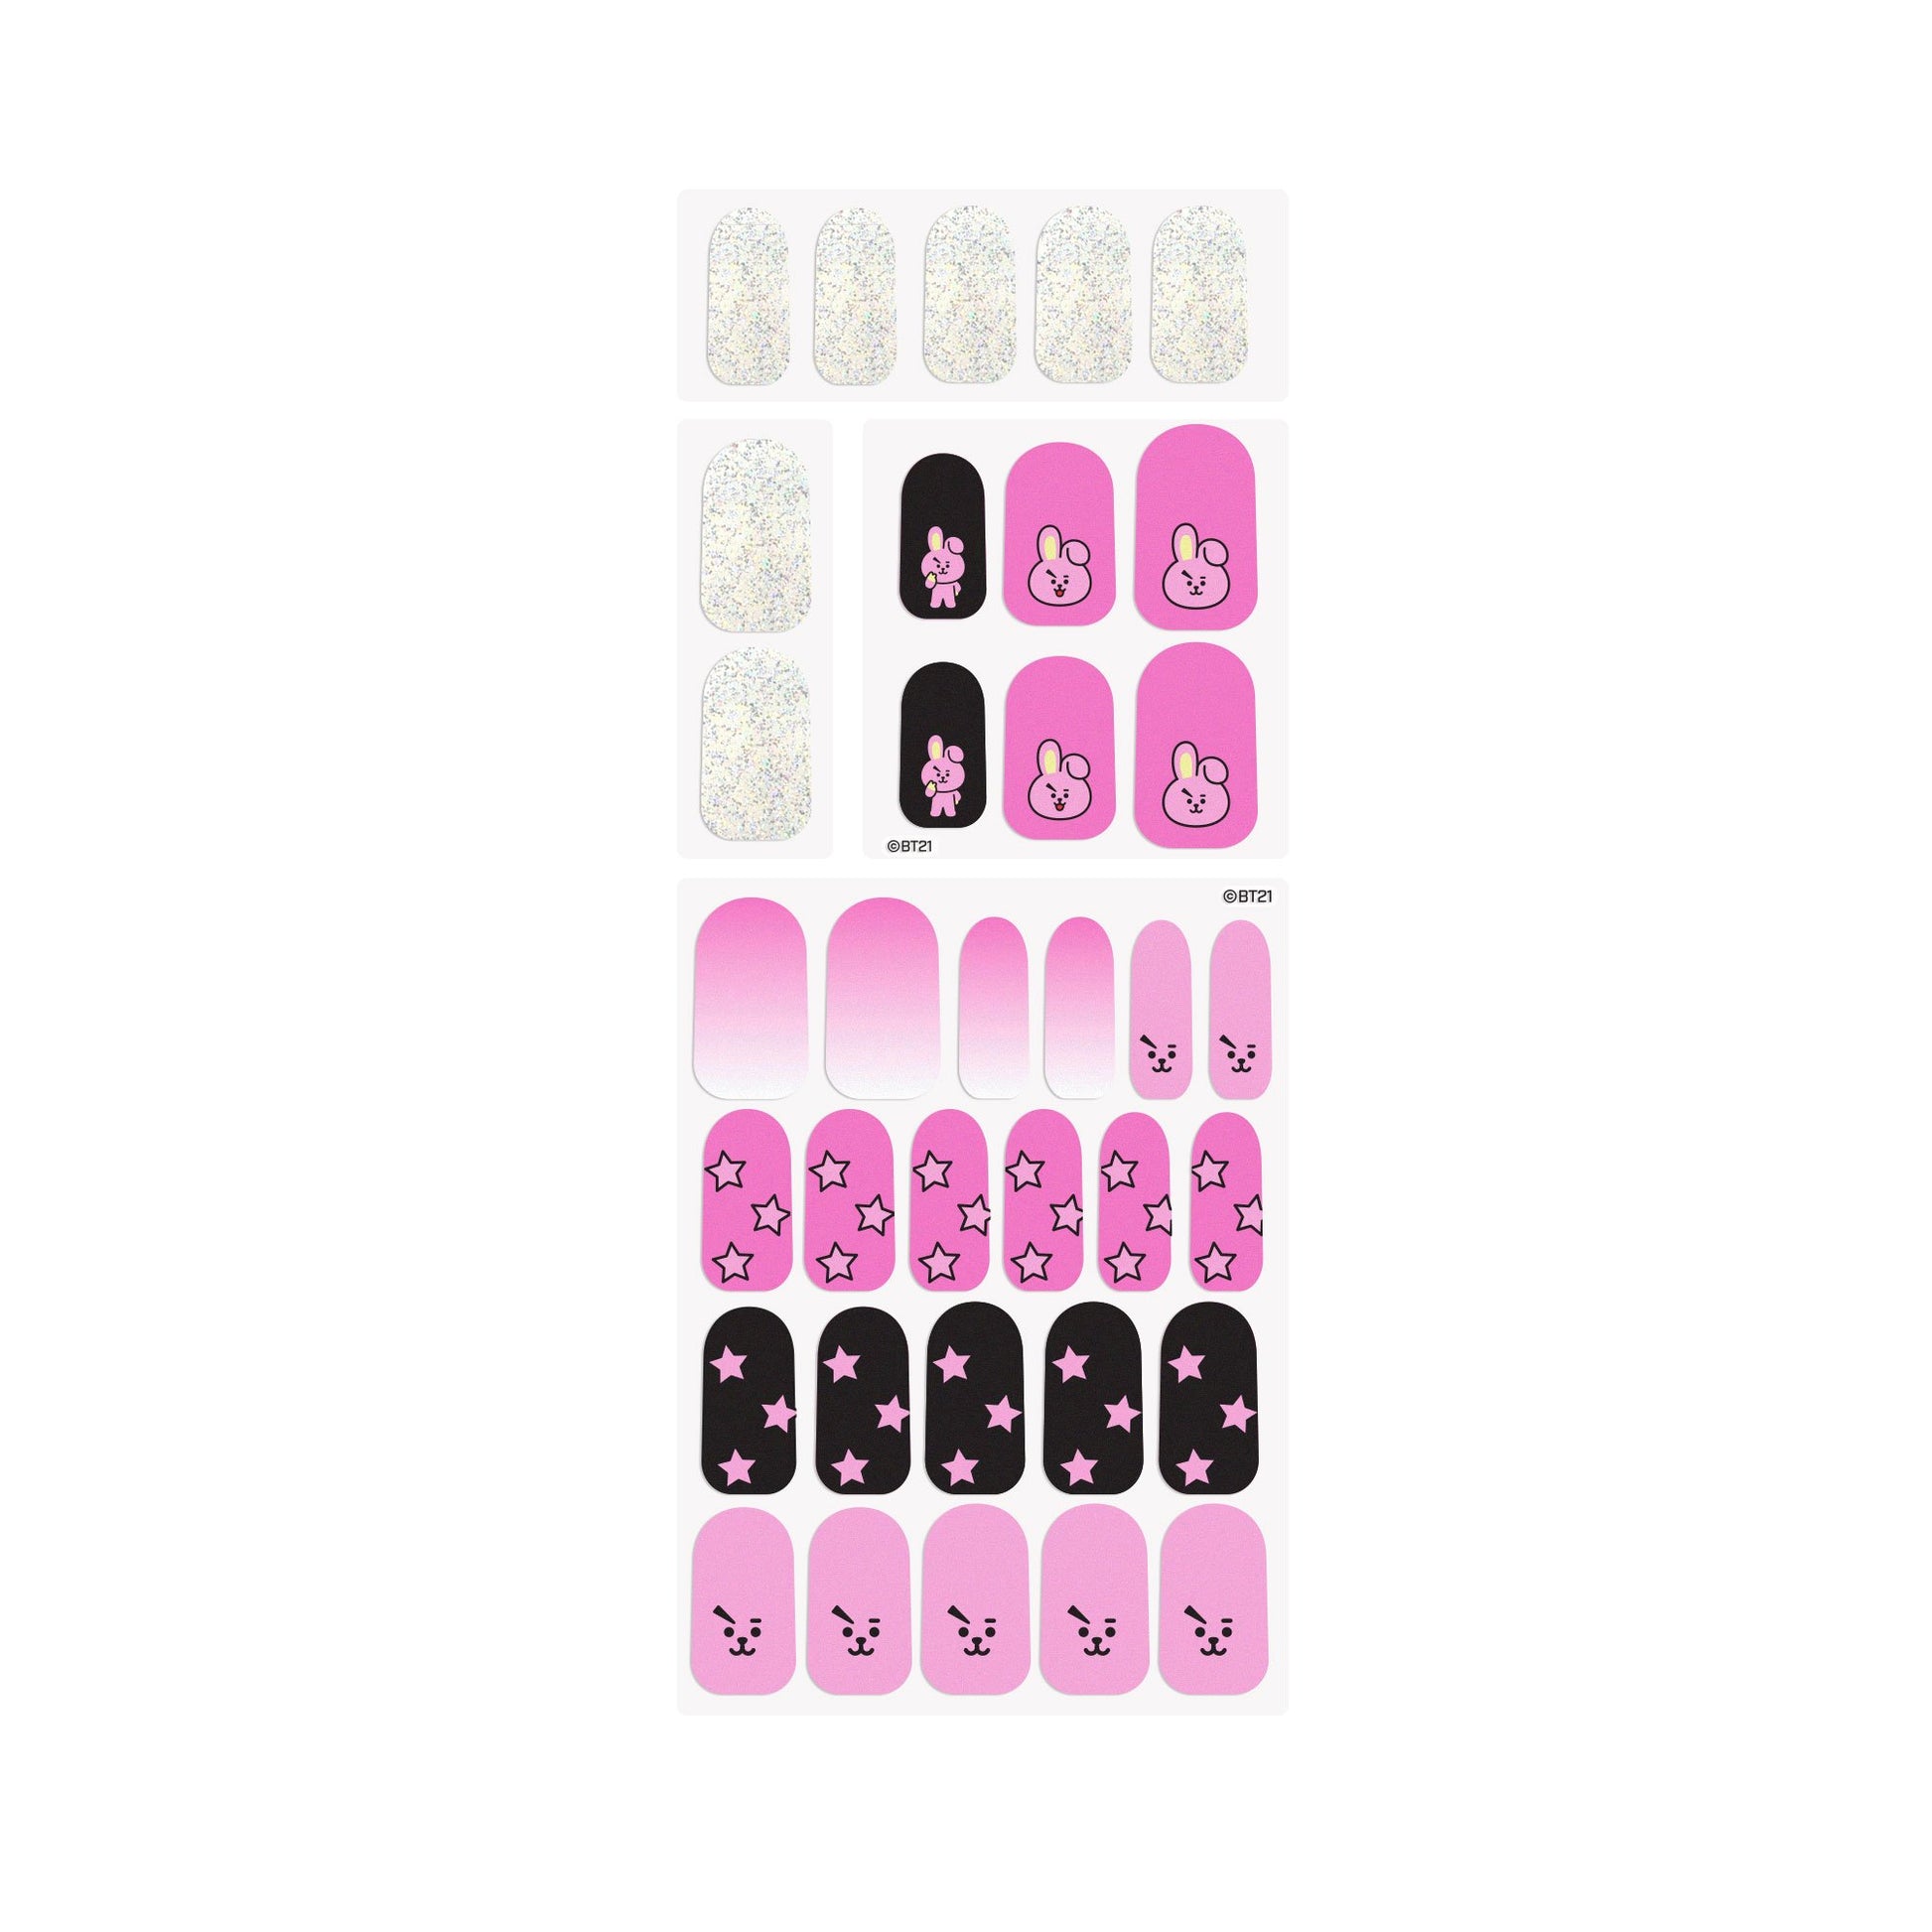 The Crème Shop | BT21: COOKY Energy Pink Gel Nail Strips (Set of 35) Nail Strips The Crème Shop x BT21 